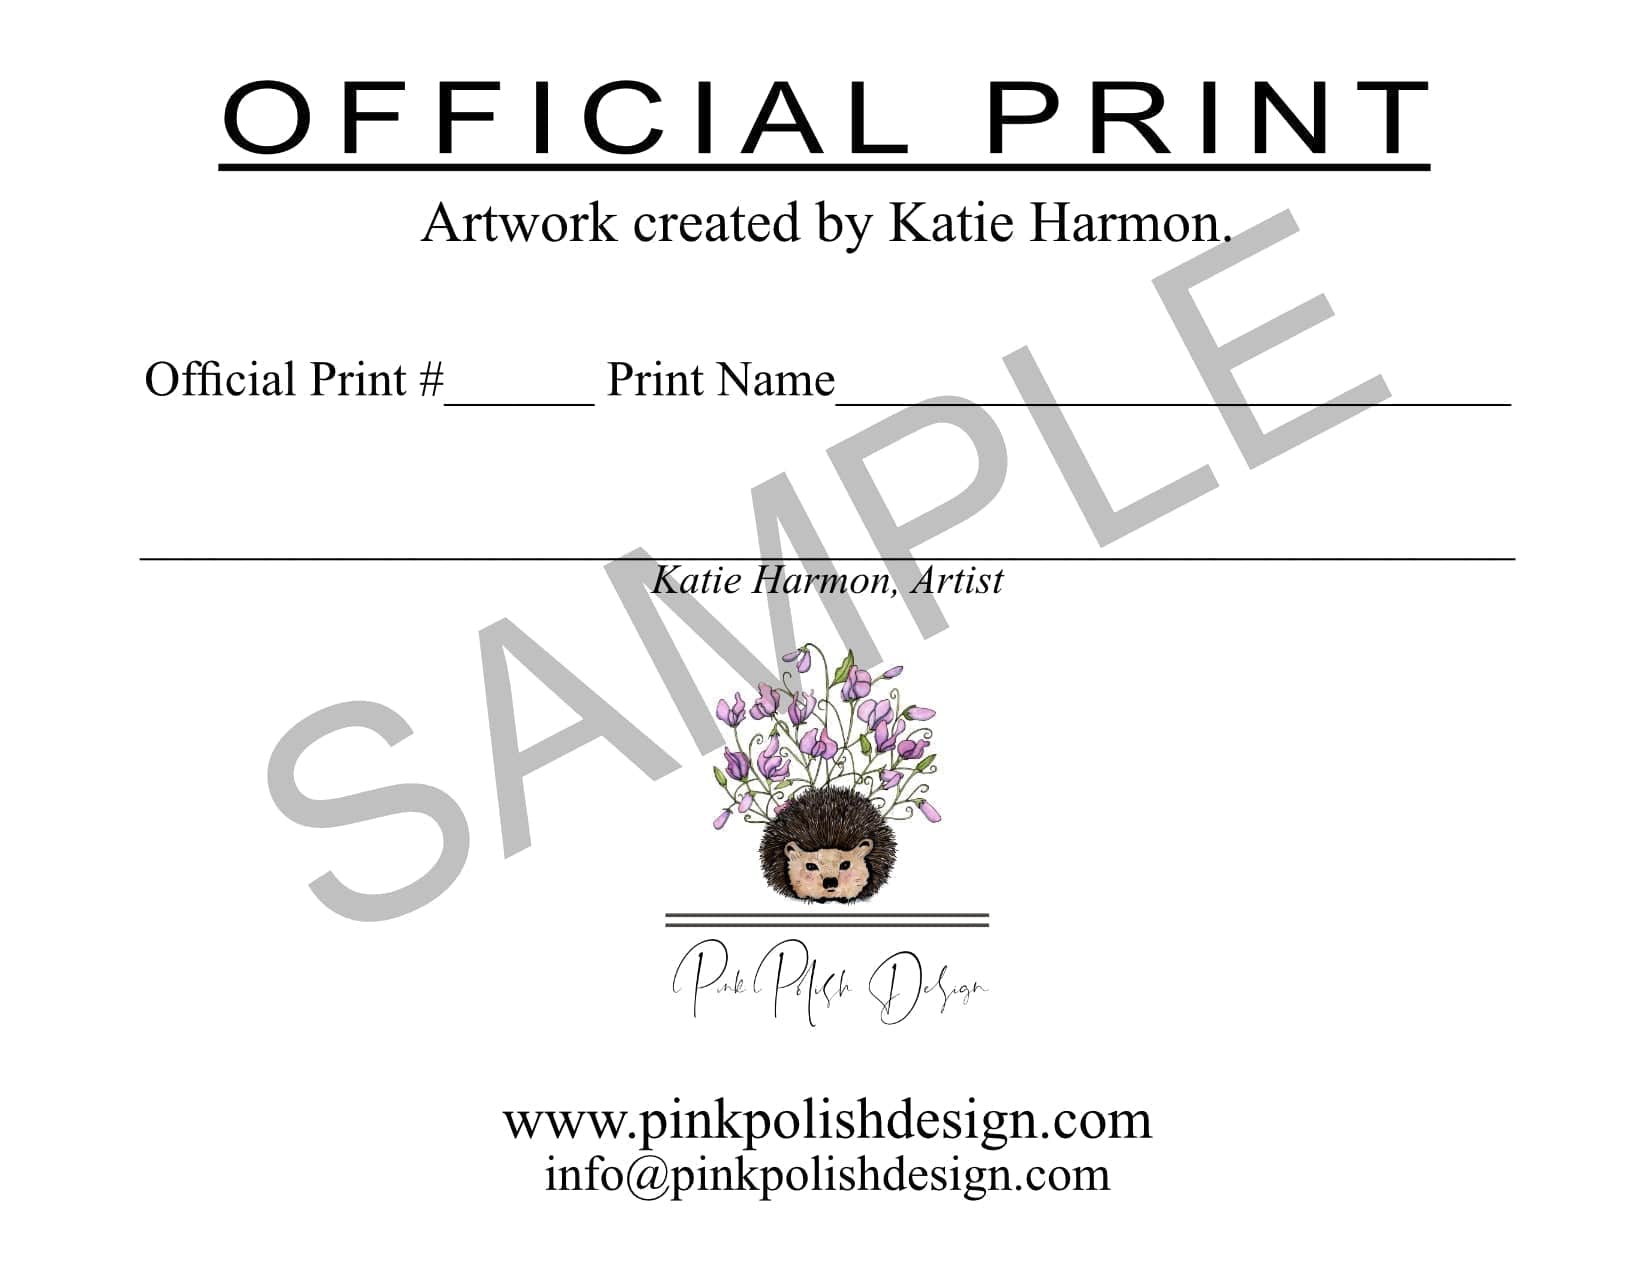 PinkPolish Design Art Prints "Farm" Ink Drawing: Art Print